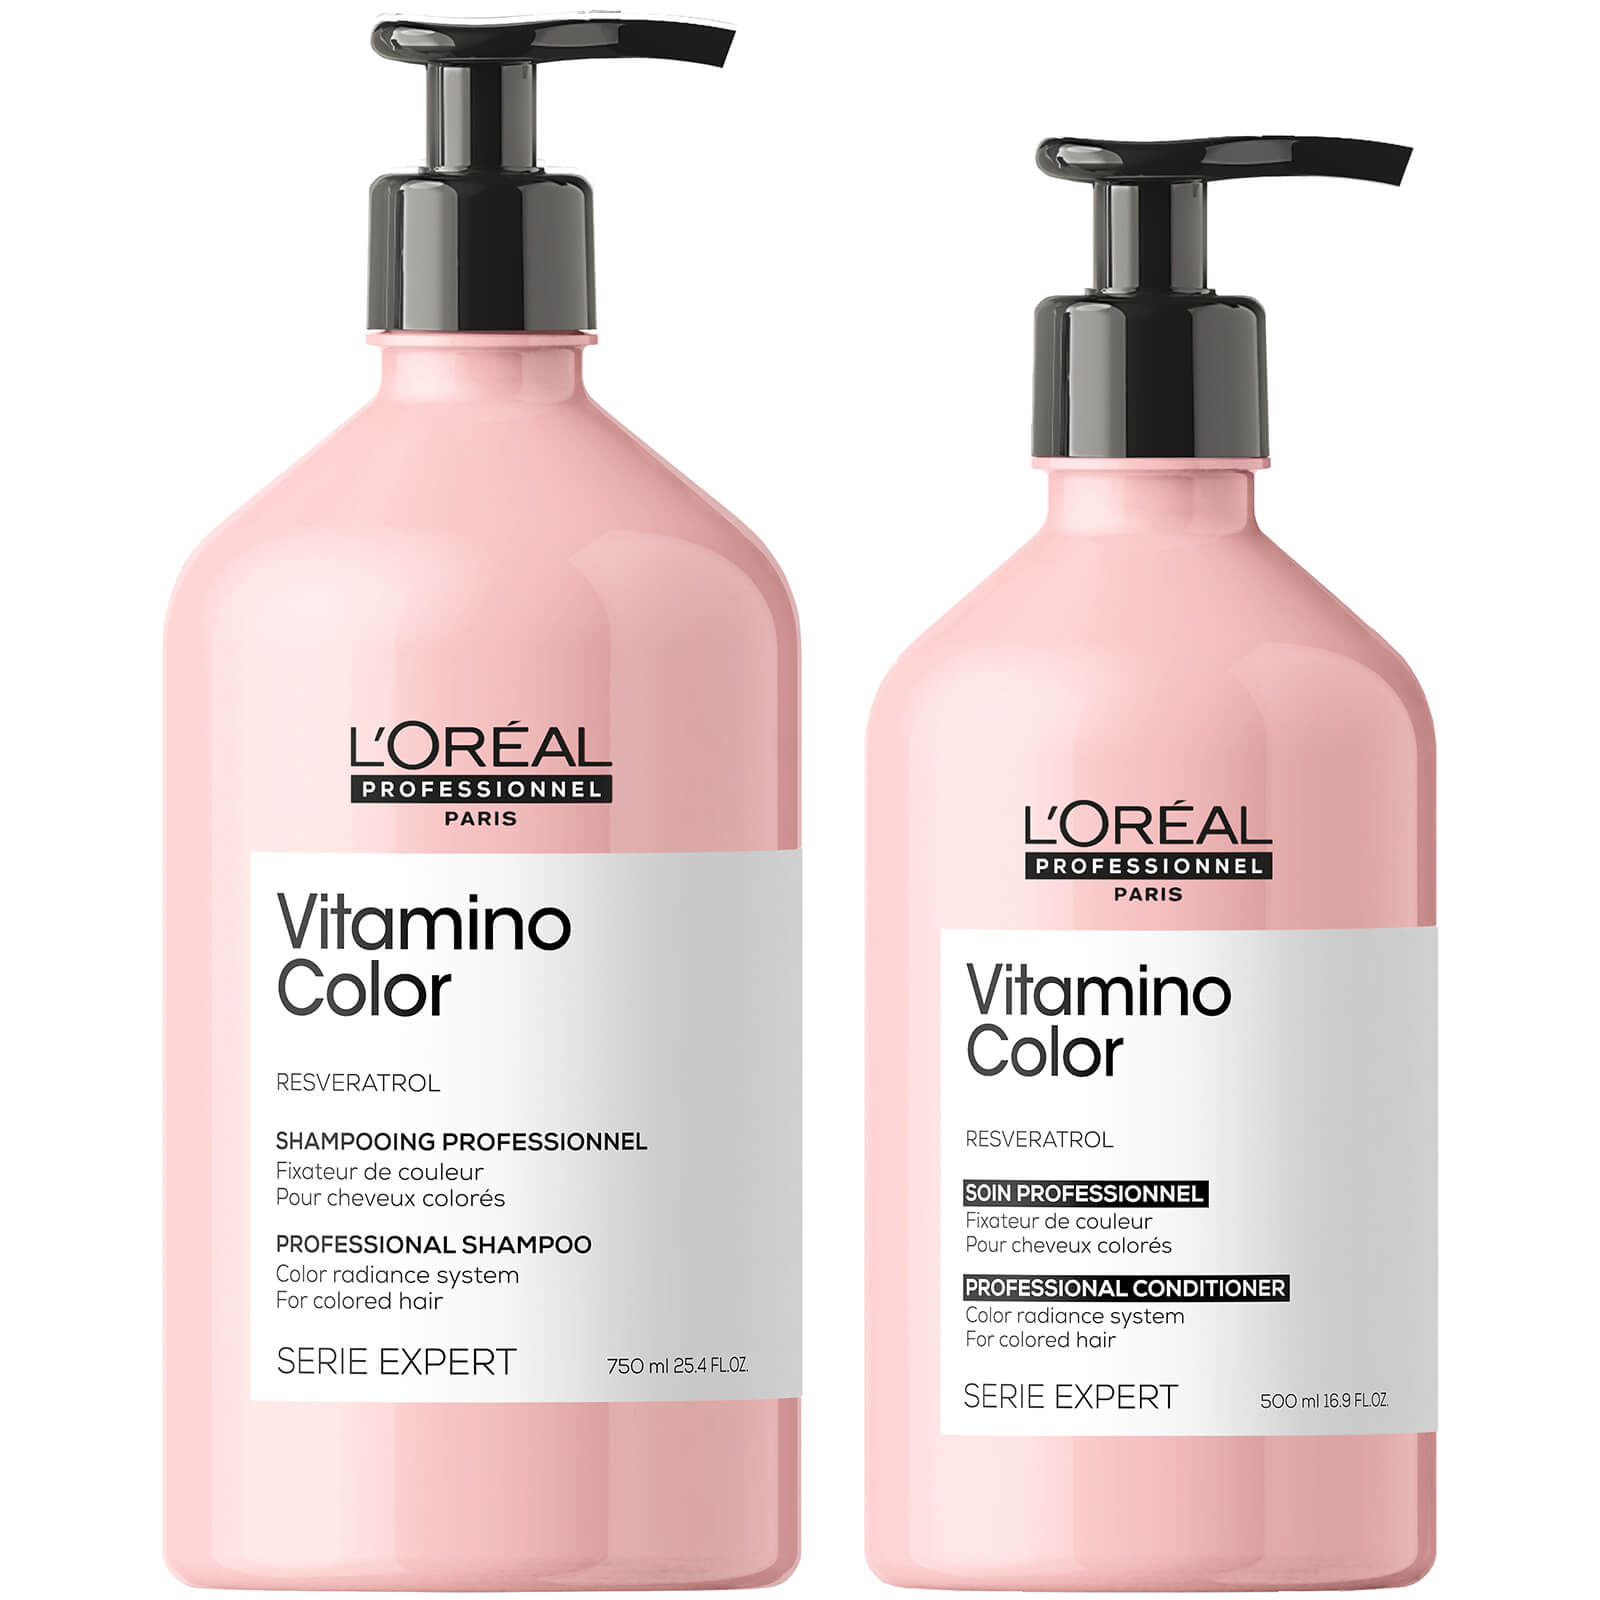 L'oreal Professionnel Vitamino Large Shampoo And Conditioner Bundle